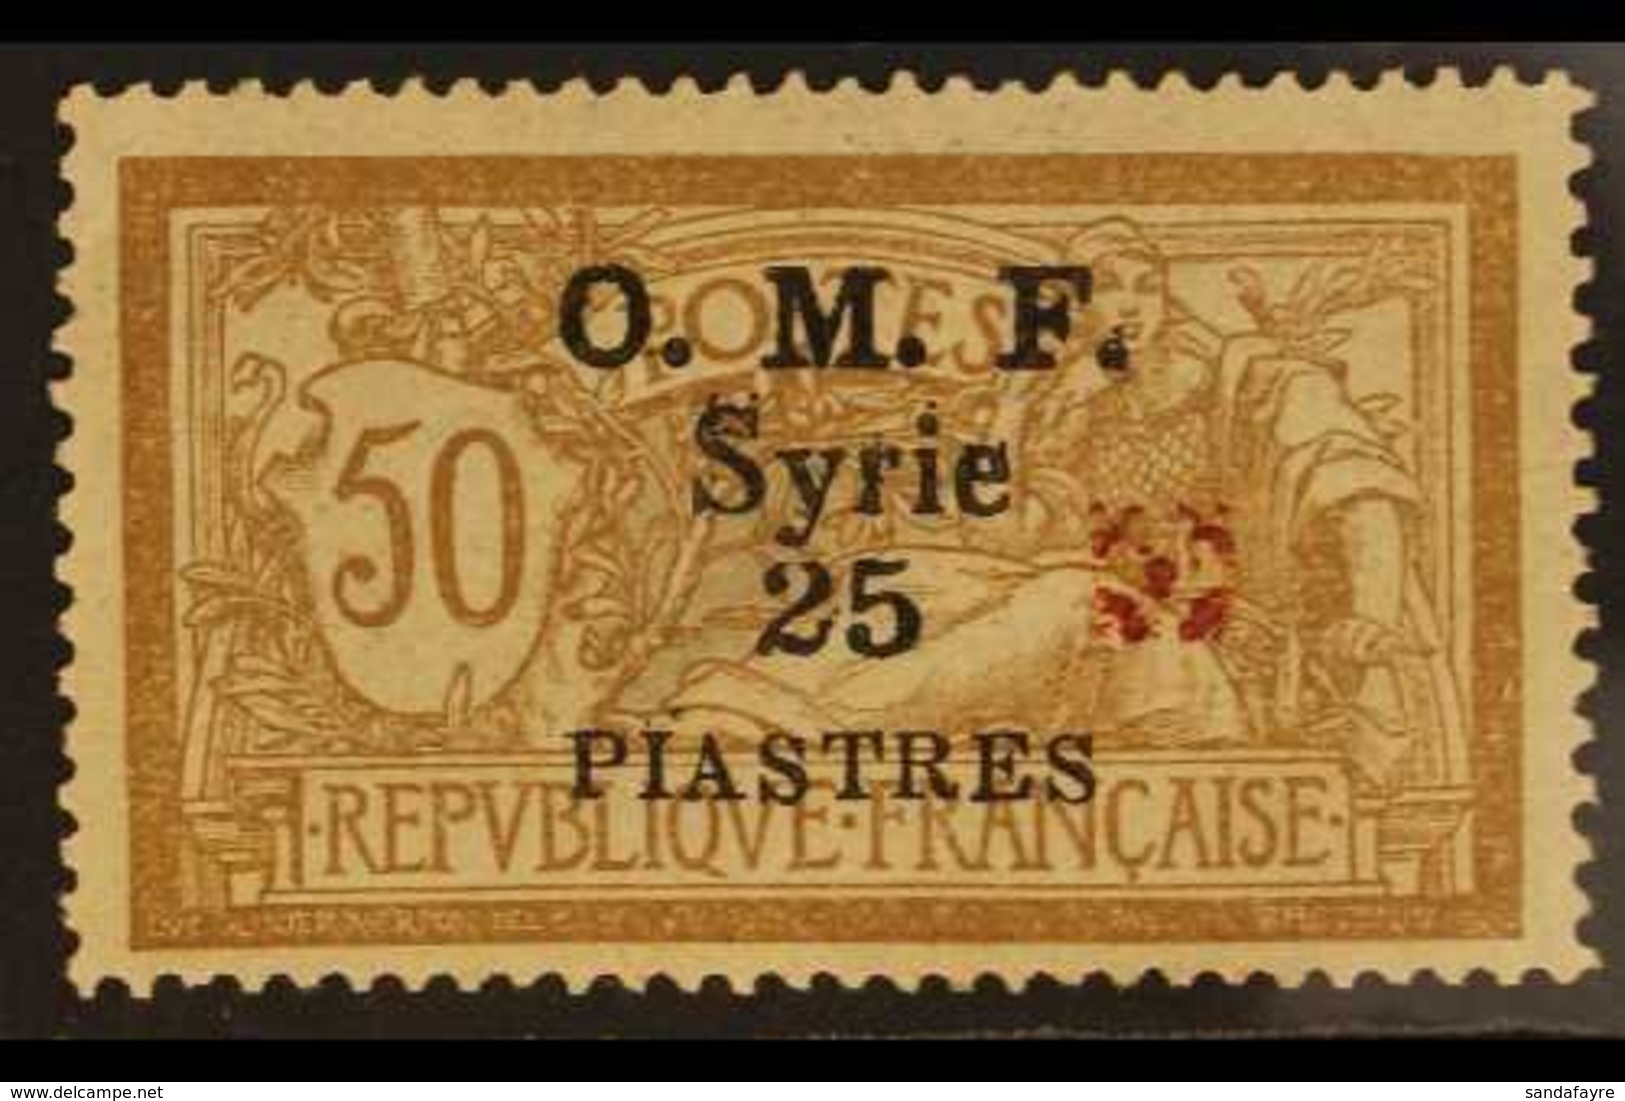 1920 25p On 50c Aleppo Vilayet Red Rosette Overprint, SG 54b, Very Fine Mint Part Og. For More Images, Please Visit Http - Siria